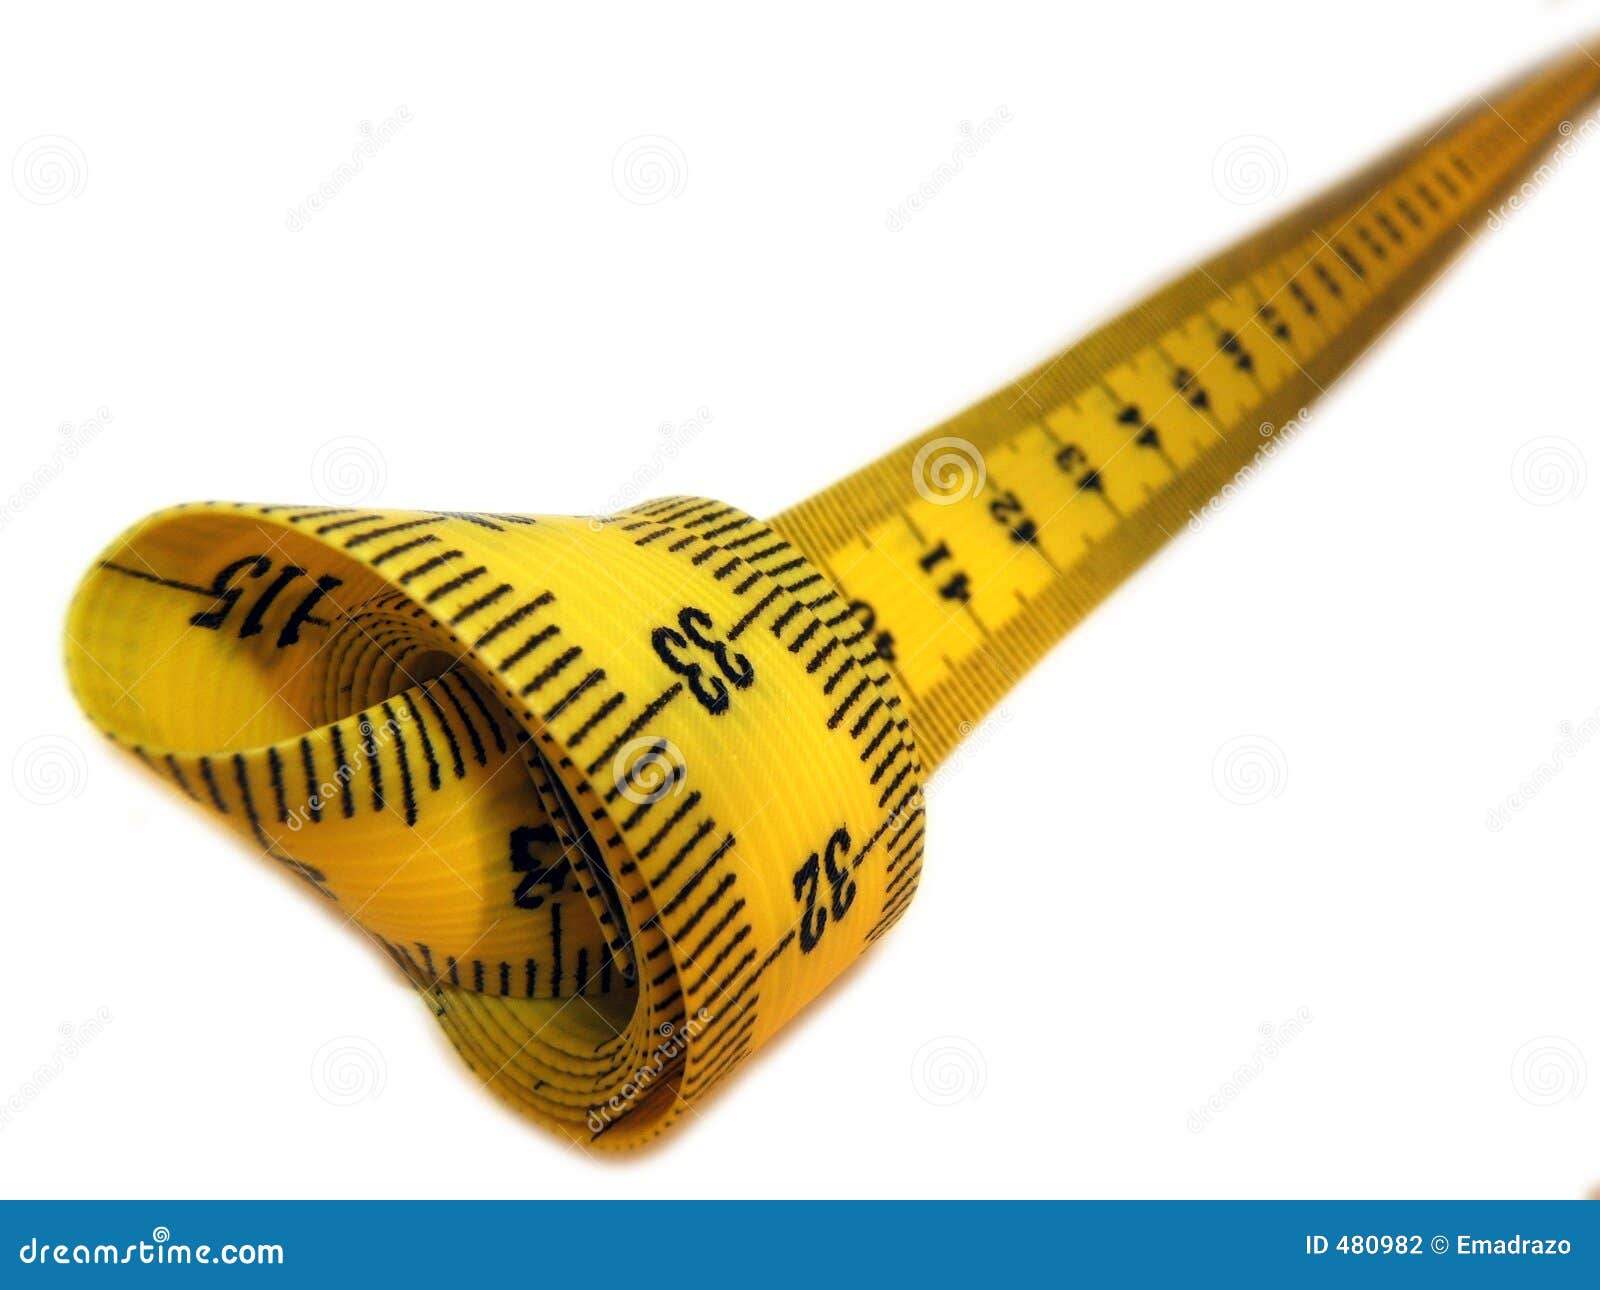 Yellow Flexible Tape Measure Stock Photo - Image of meter, number: 229859206